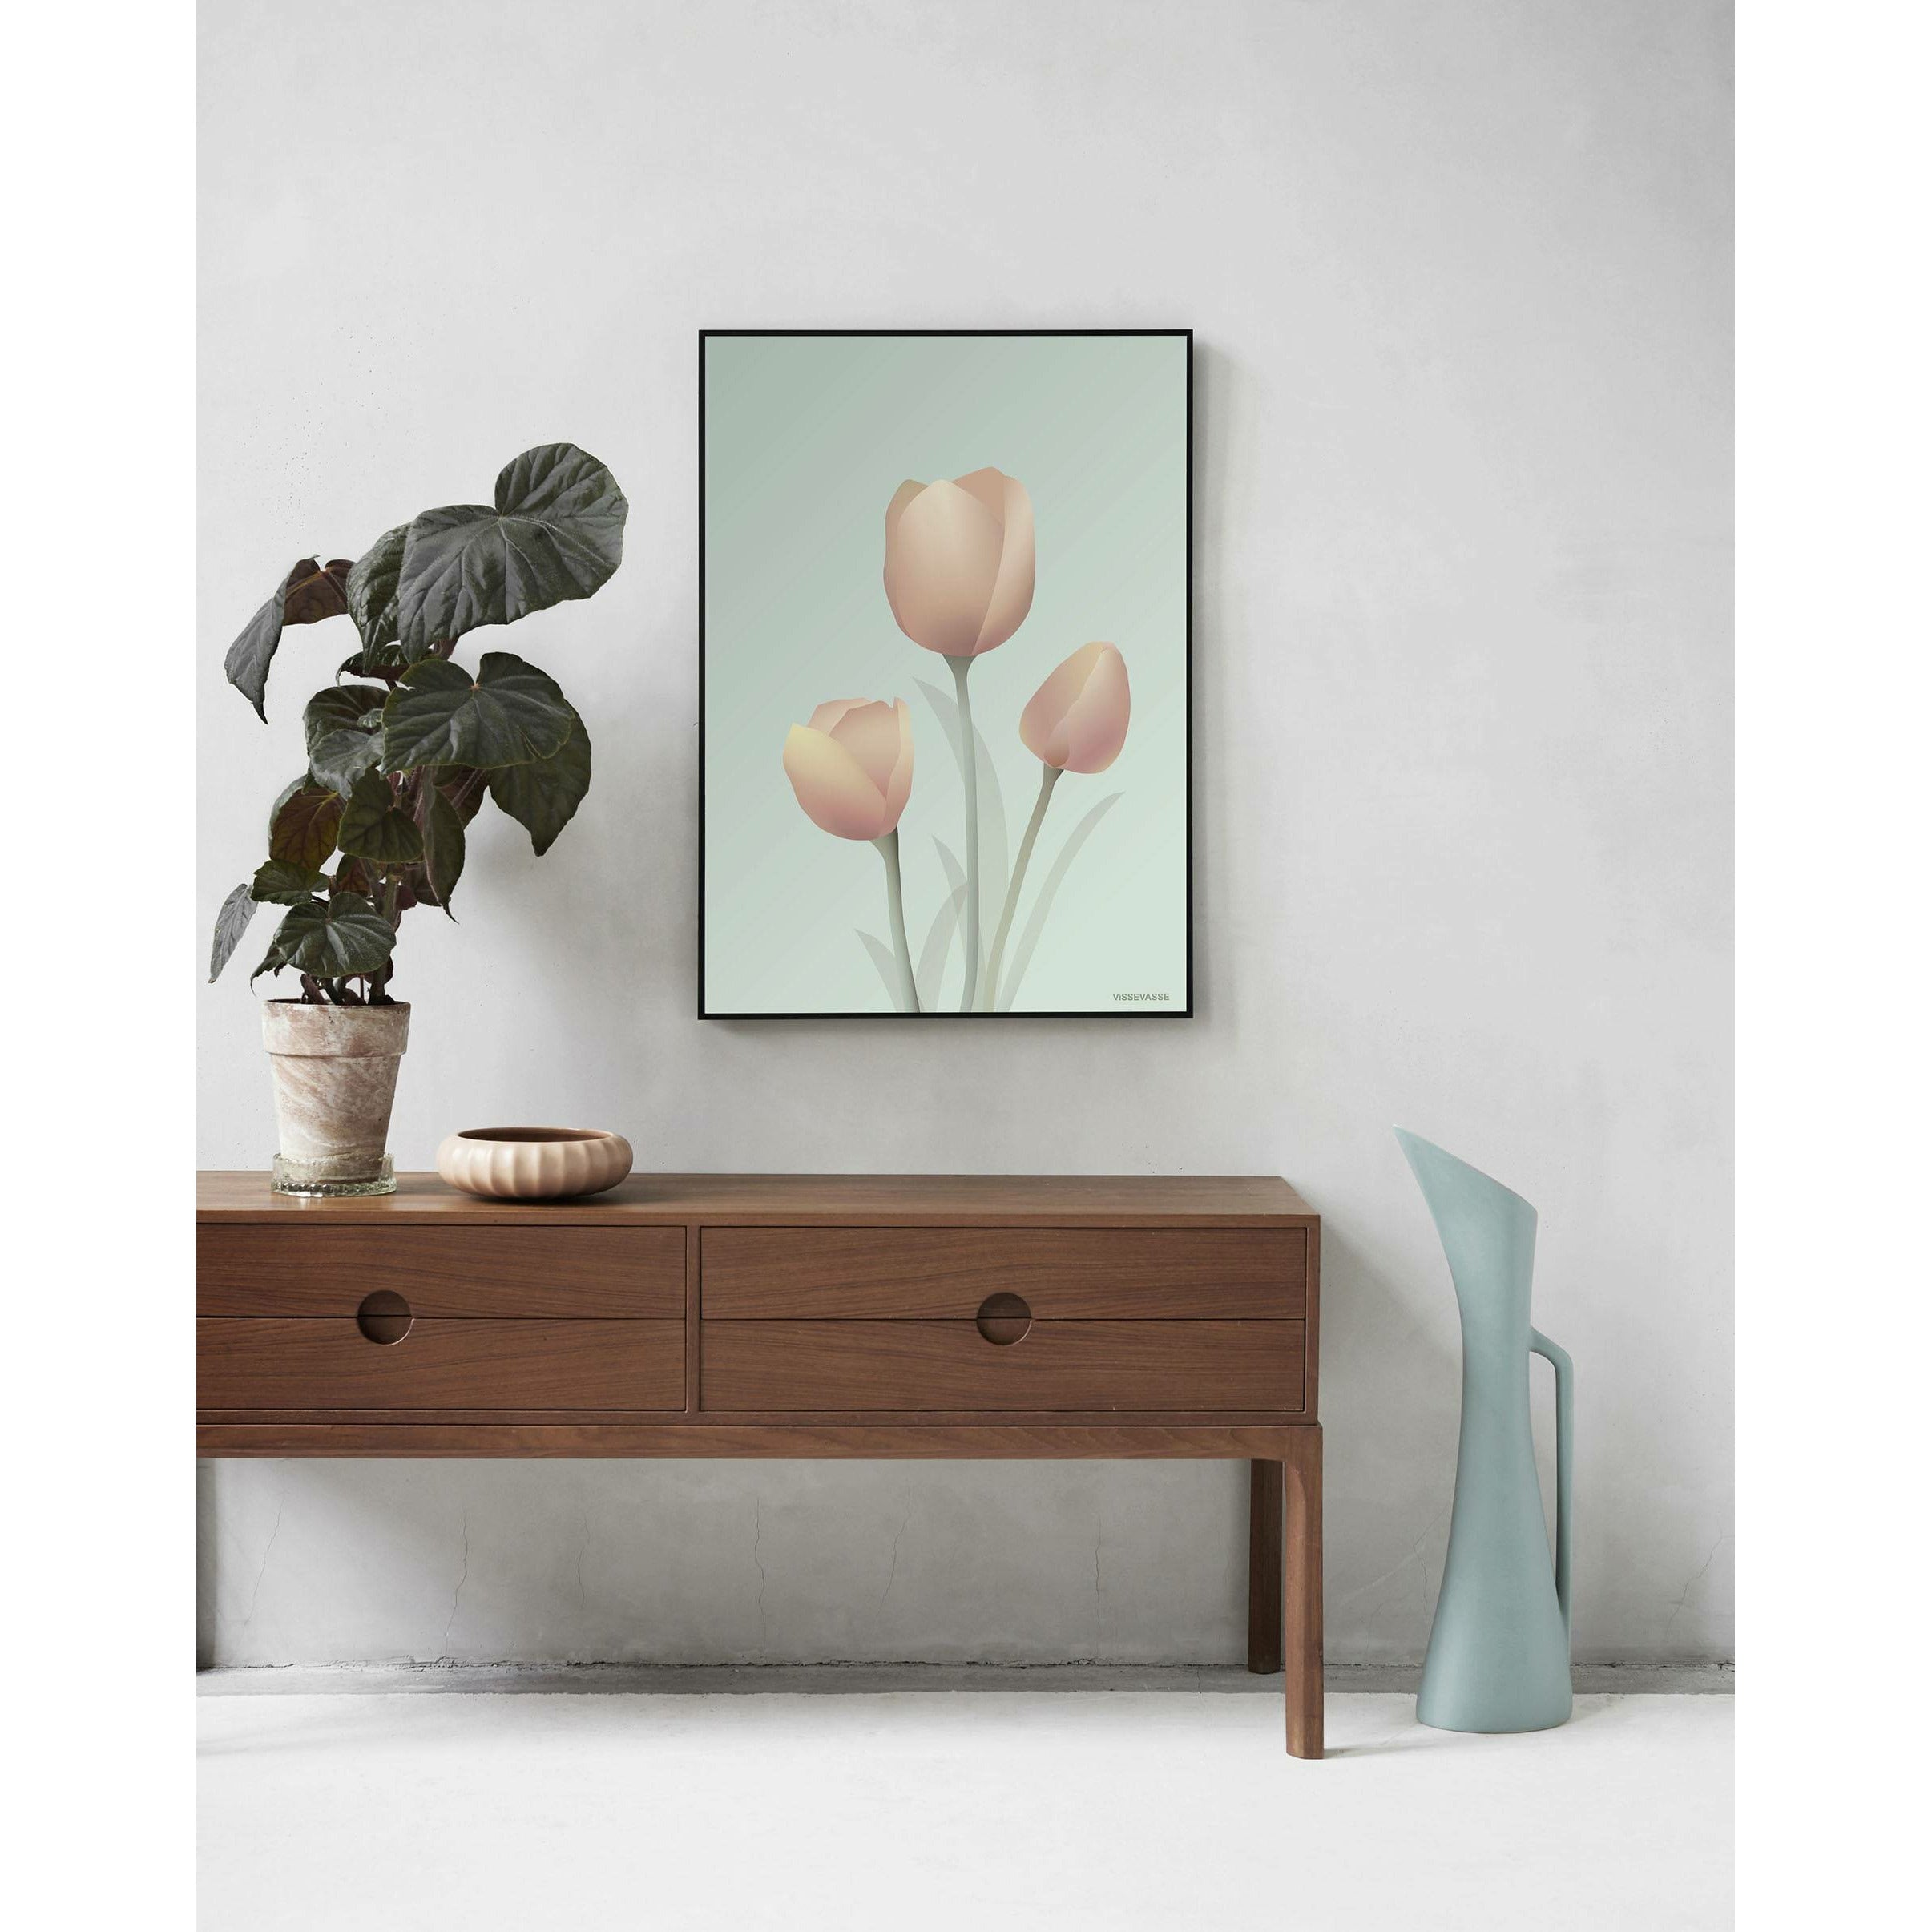 Vissevasse Tulip -plakat 50 x70 cm, mynte